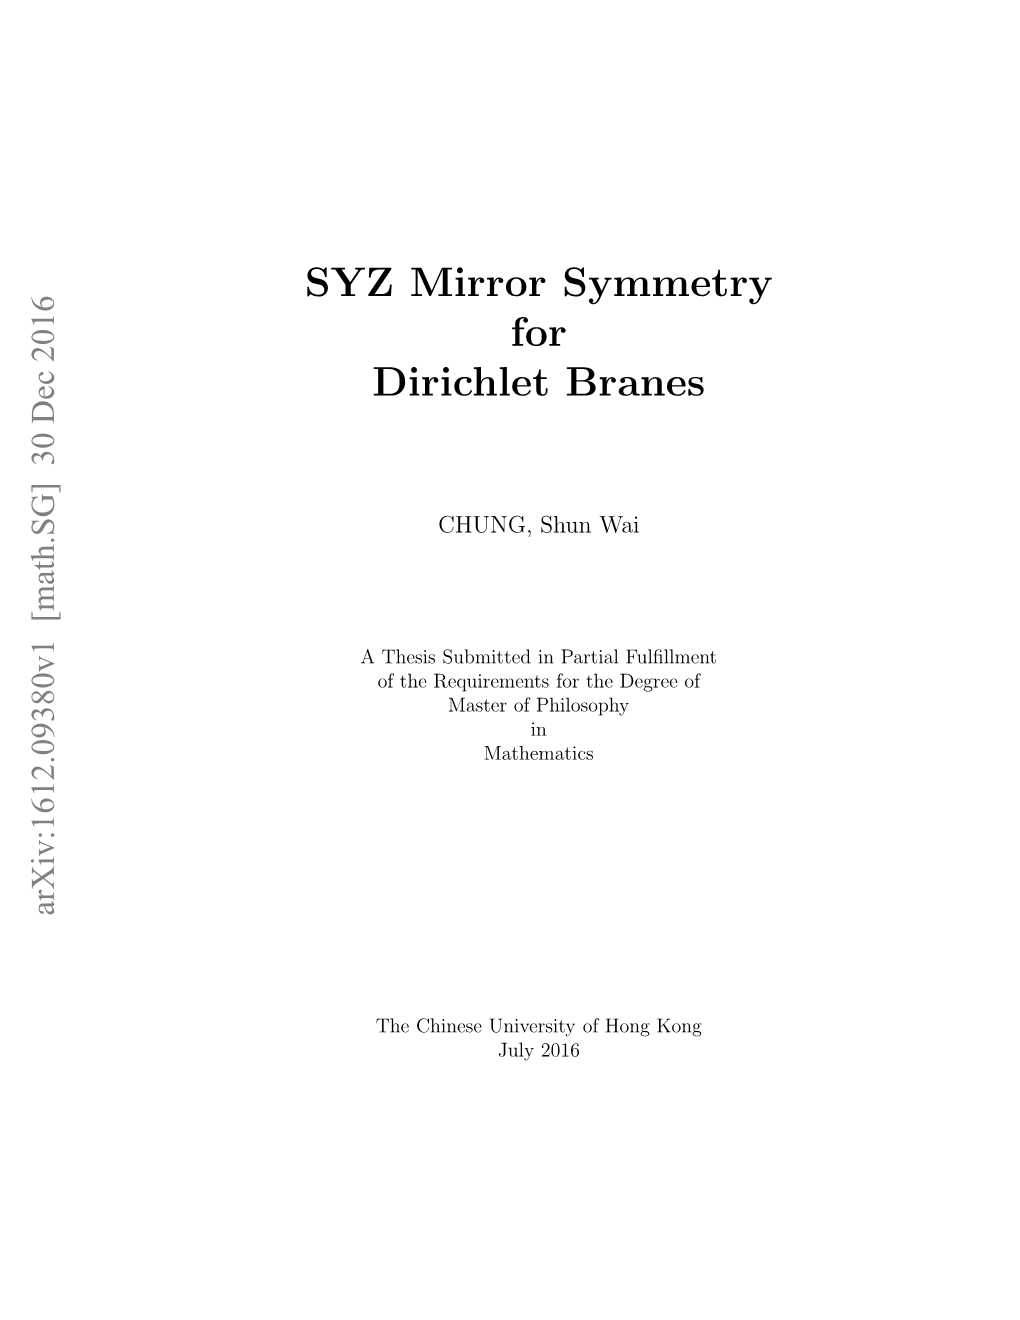 SYZ Mirror Symmetry for Dirichlet Branes